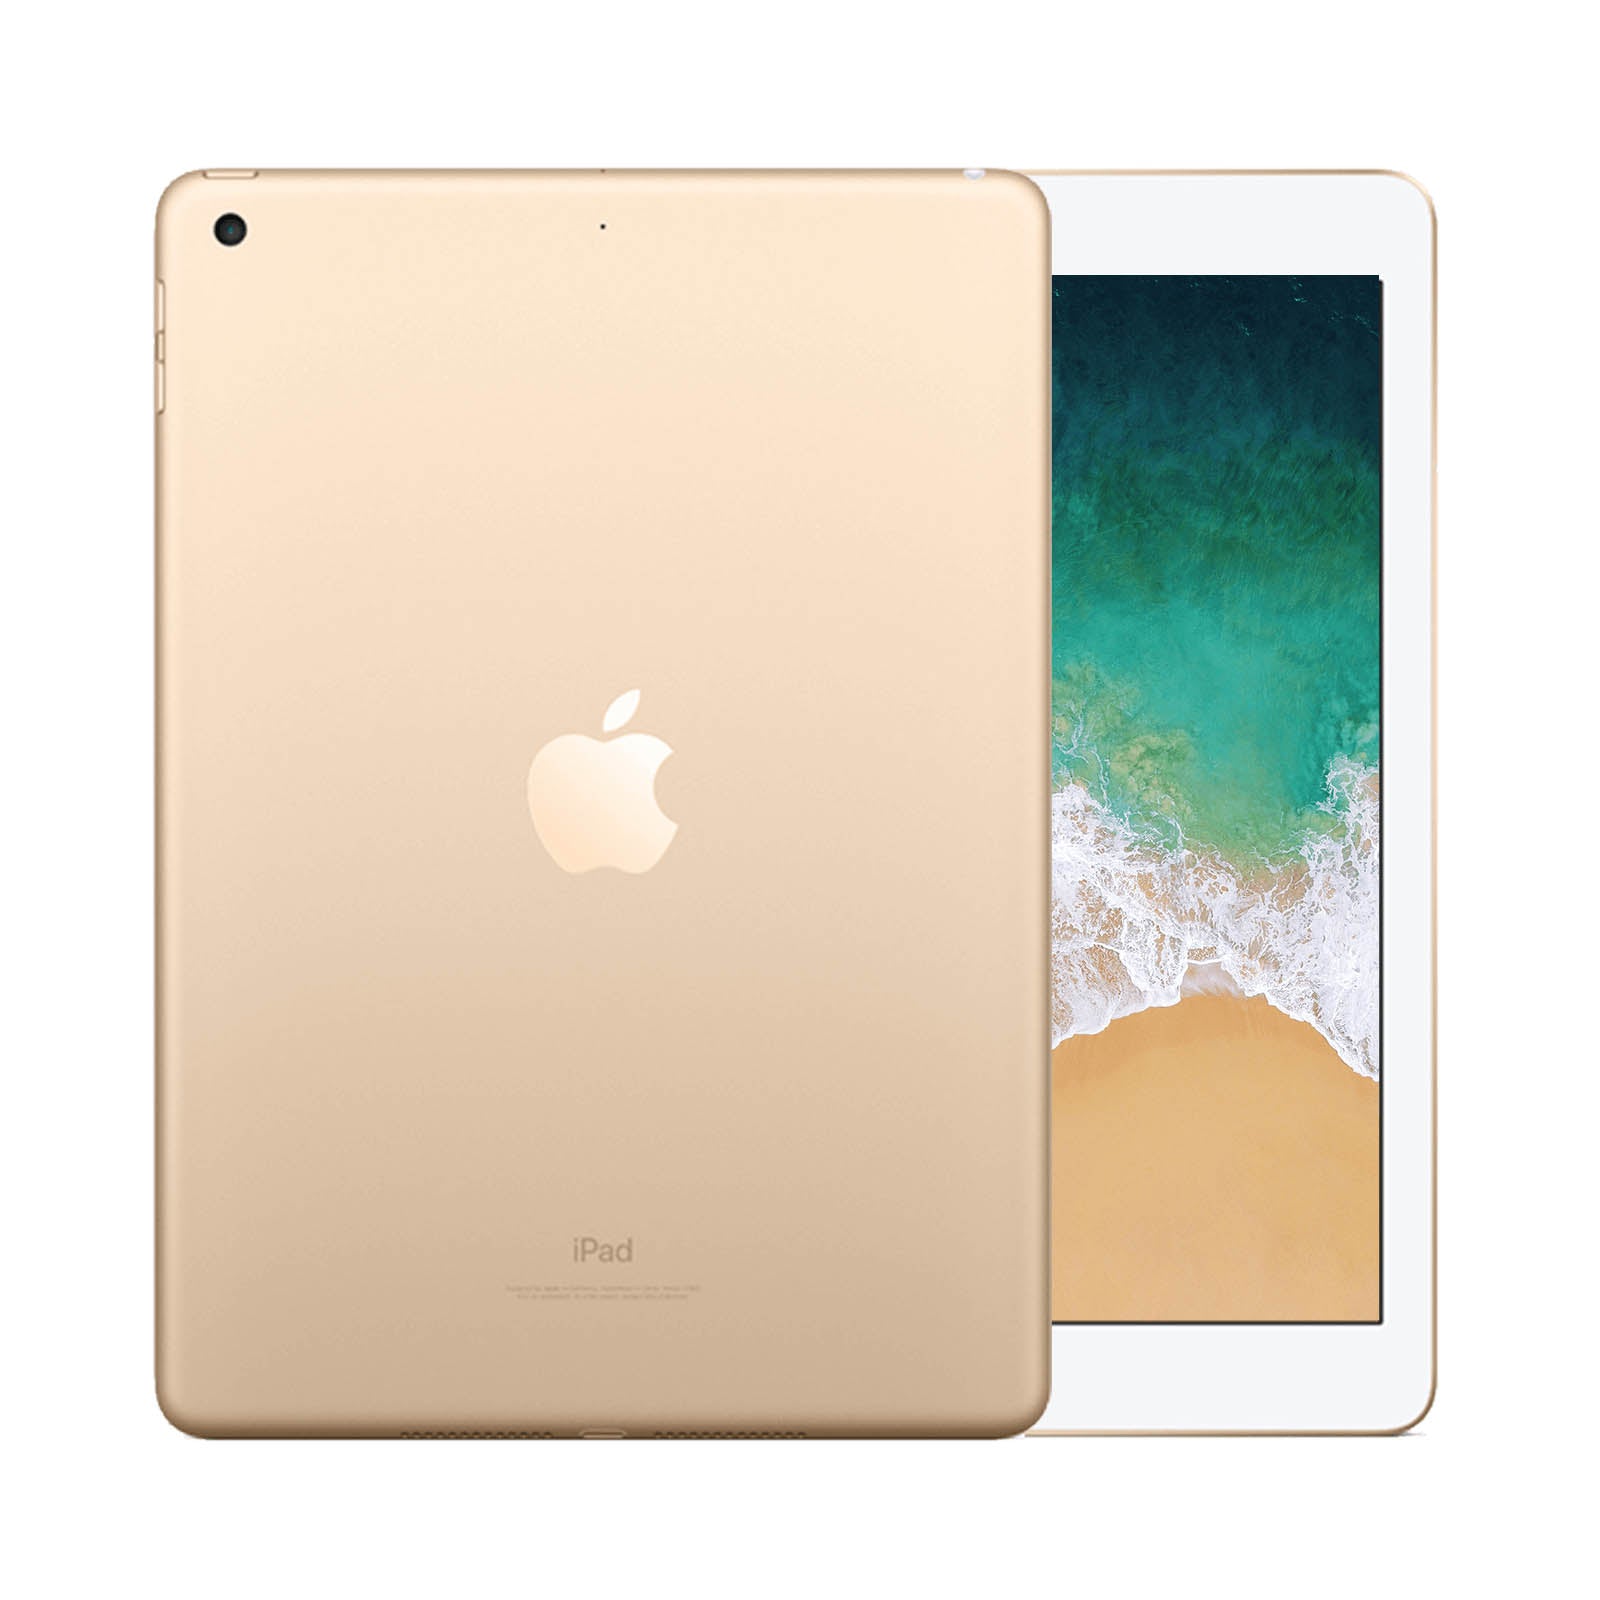 Apple iPad 5 128GB WiFi Gold Gut